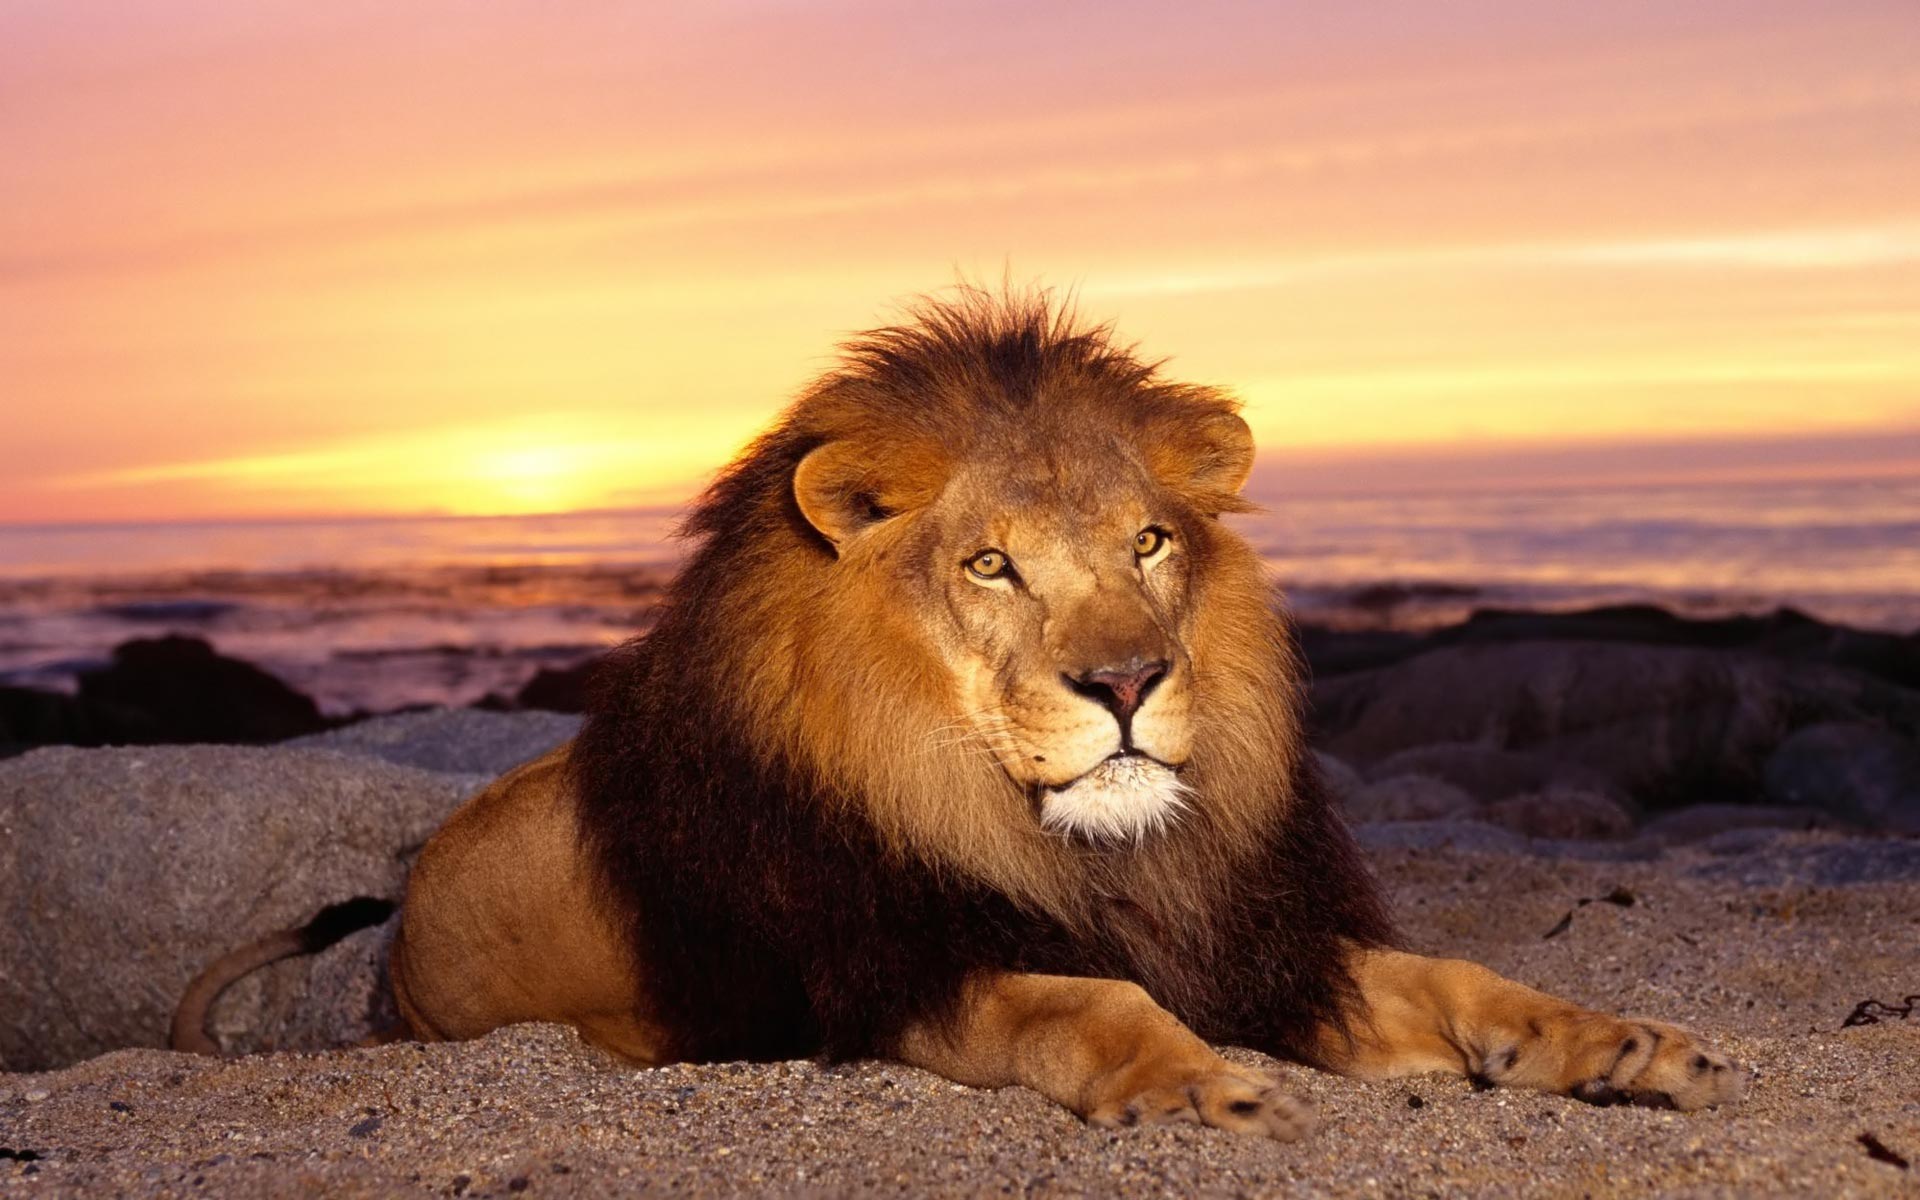 Roaring lion photo